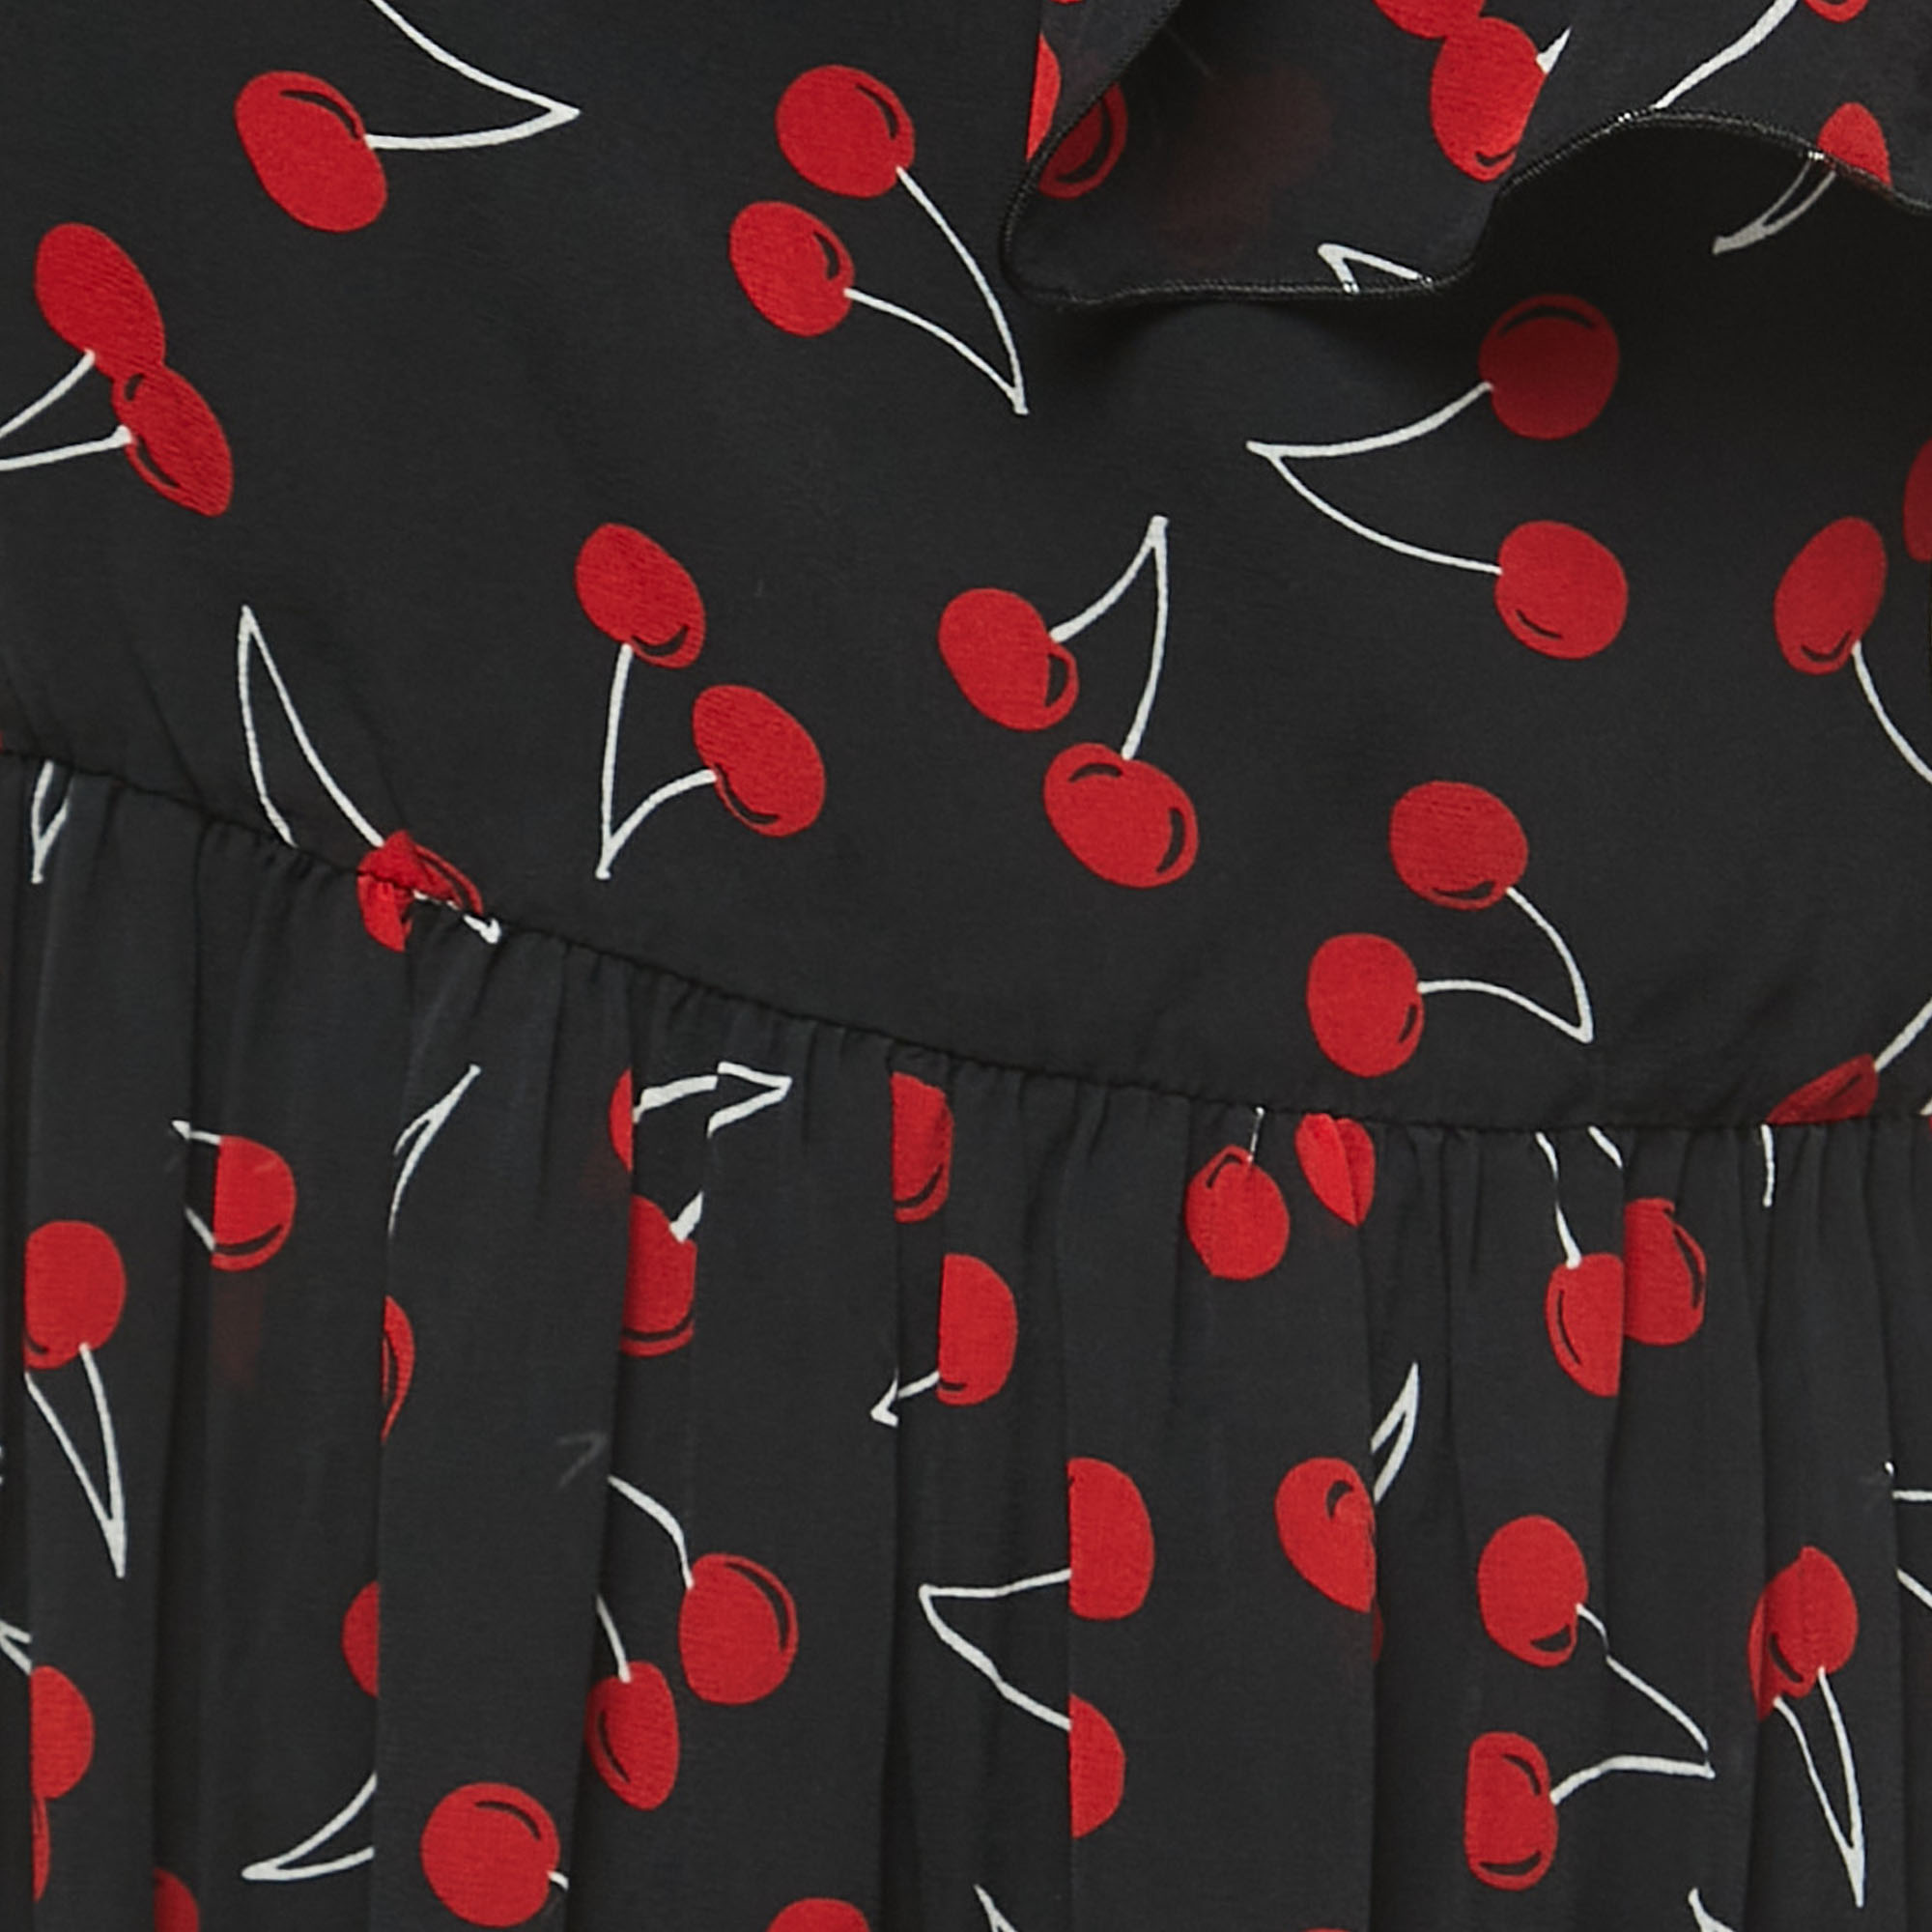 Saint Laurent Black Cherry Printed Silk Ruffled One-Shoulder Dress L